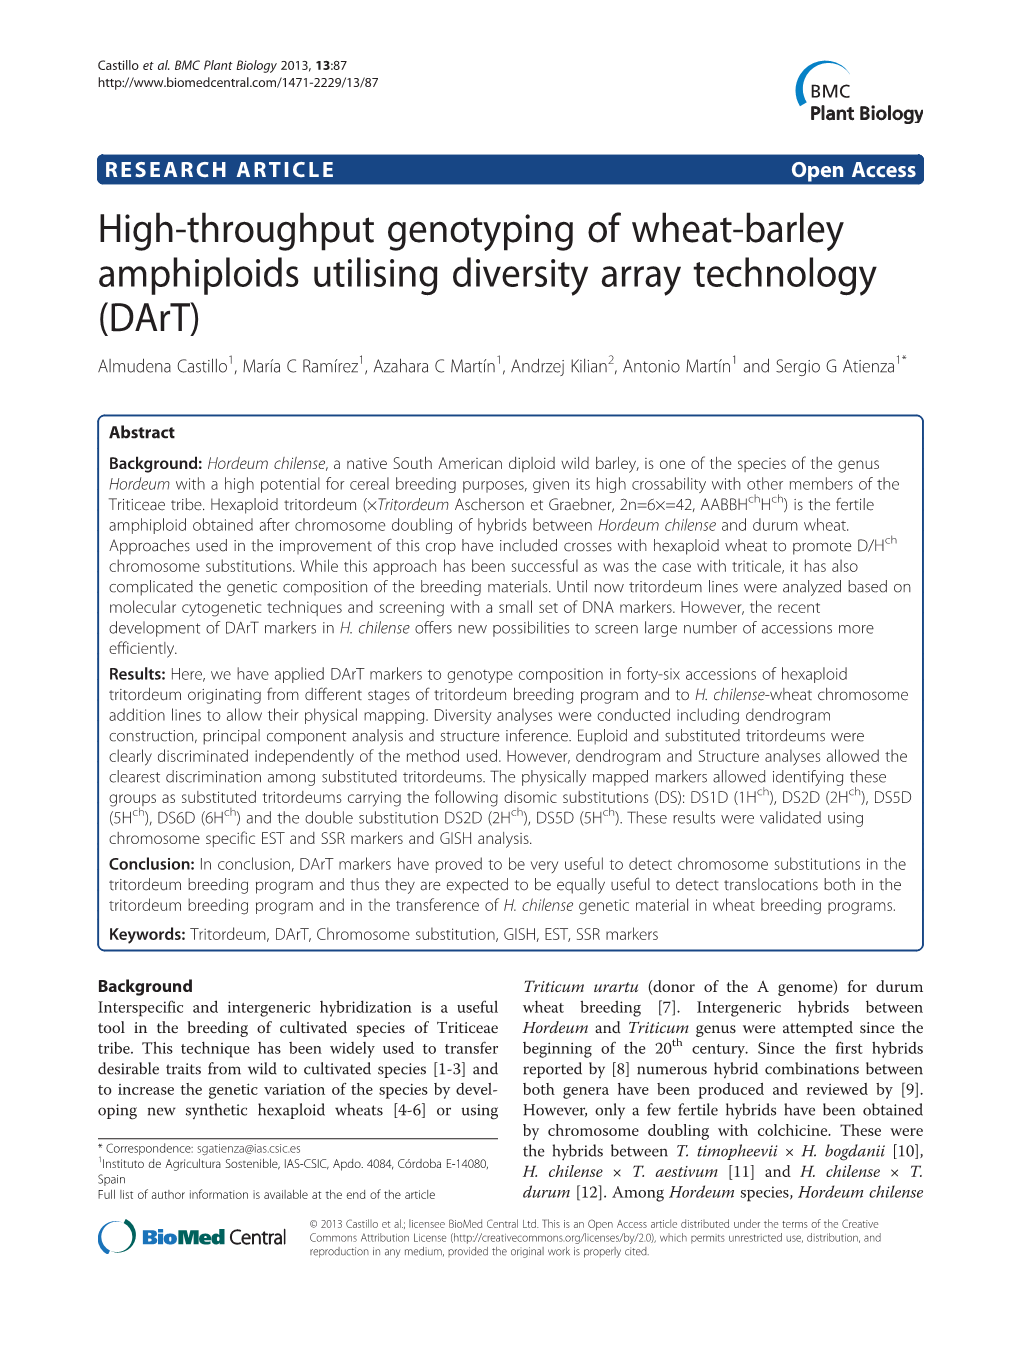 High-Throughput Genotyping of Wheat-Barley Amphiploids Utilising